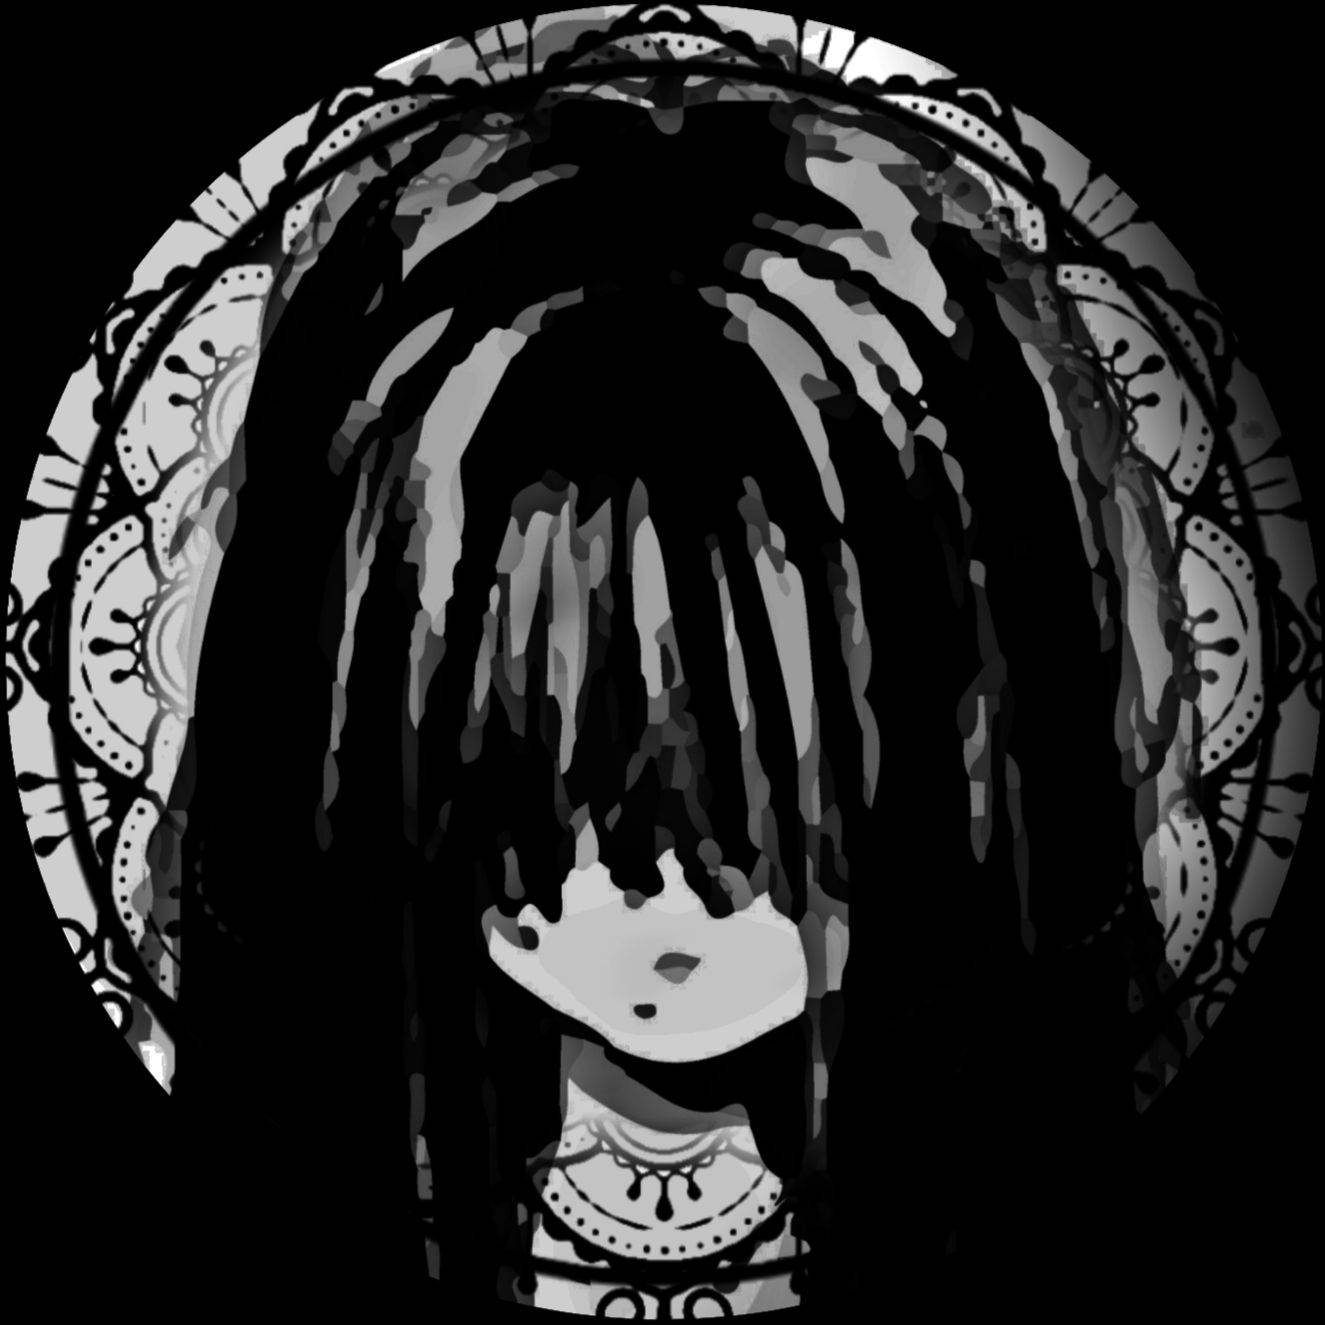 Anime Goth Girl Black And White PFP Wallpaper